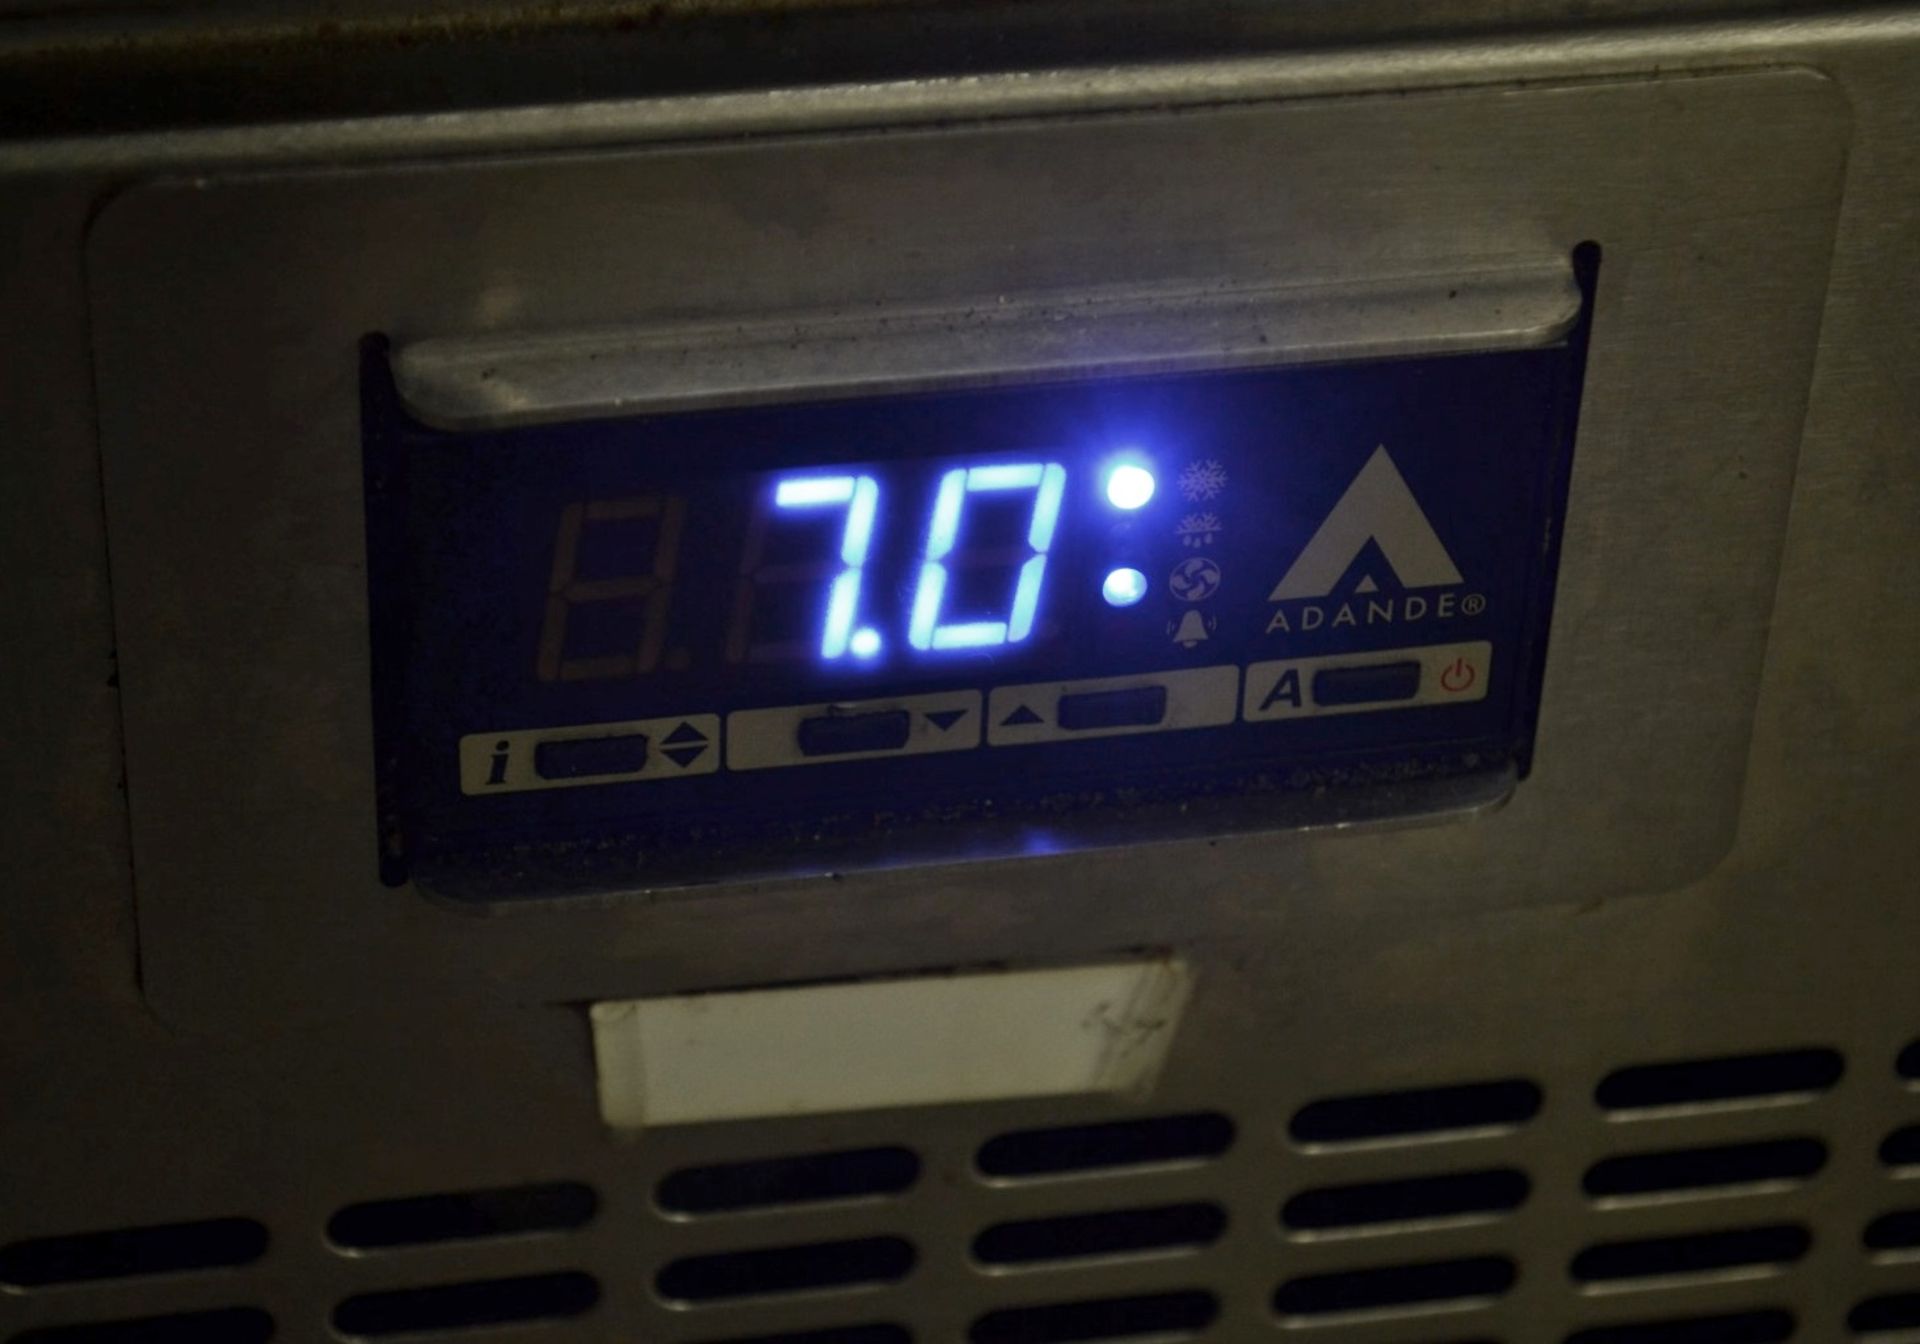 1 x ADANDE VCS R2 Under Counter Single Drawer Refrigeration Unit - Dimensions: W110 x H46 x D70cm - Image 4 of 6